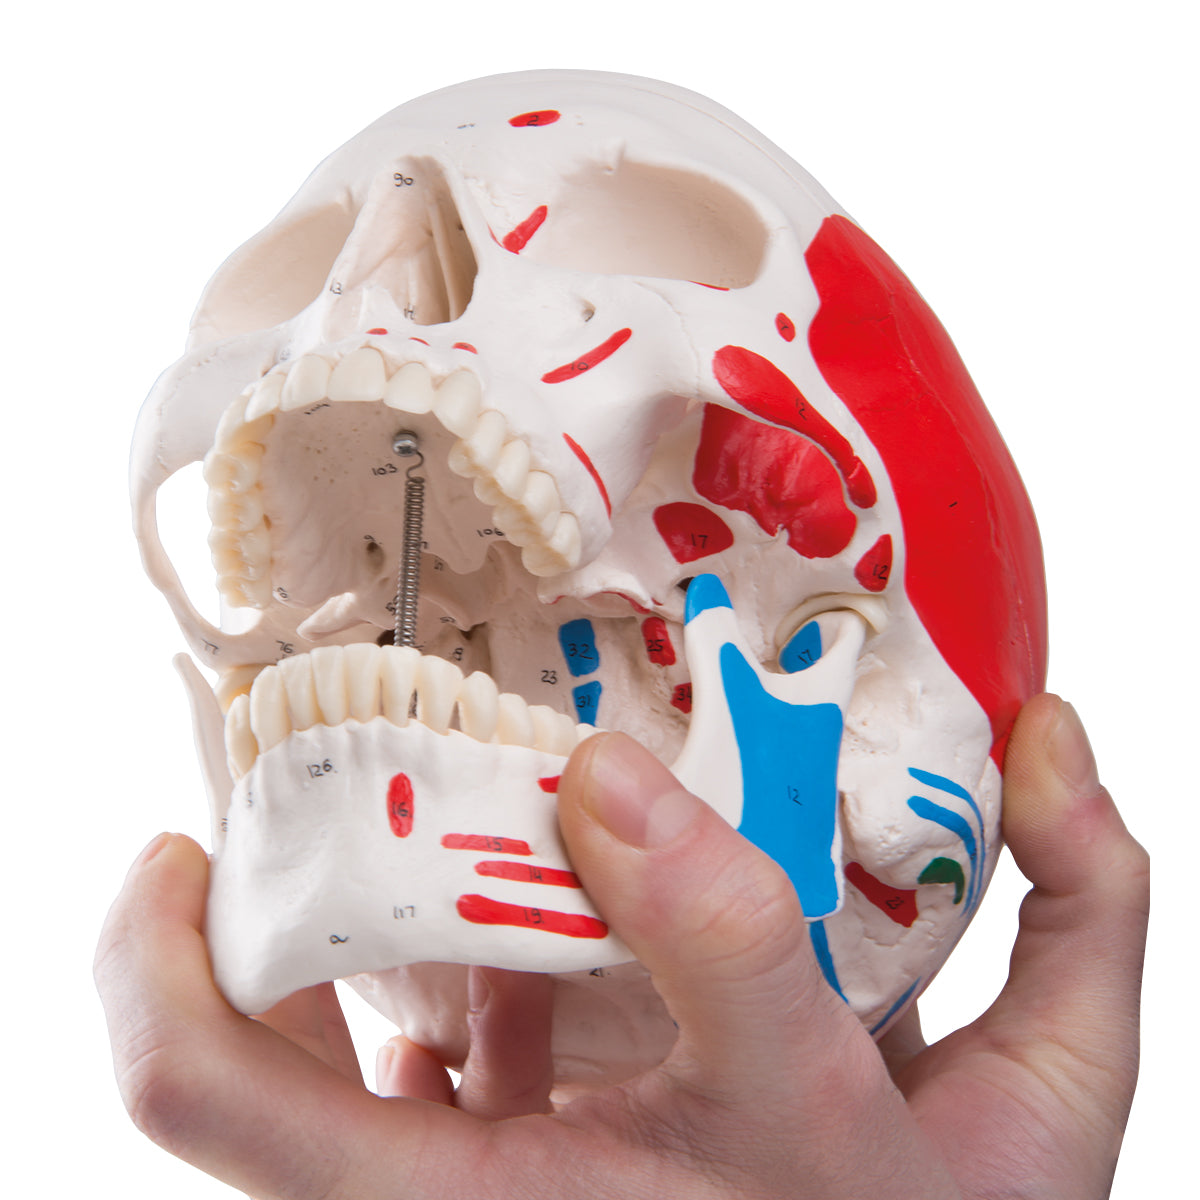 A23 Classic Human Skull Model painted, 3 part - 3B Smart Anatomy